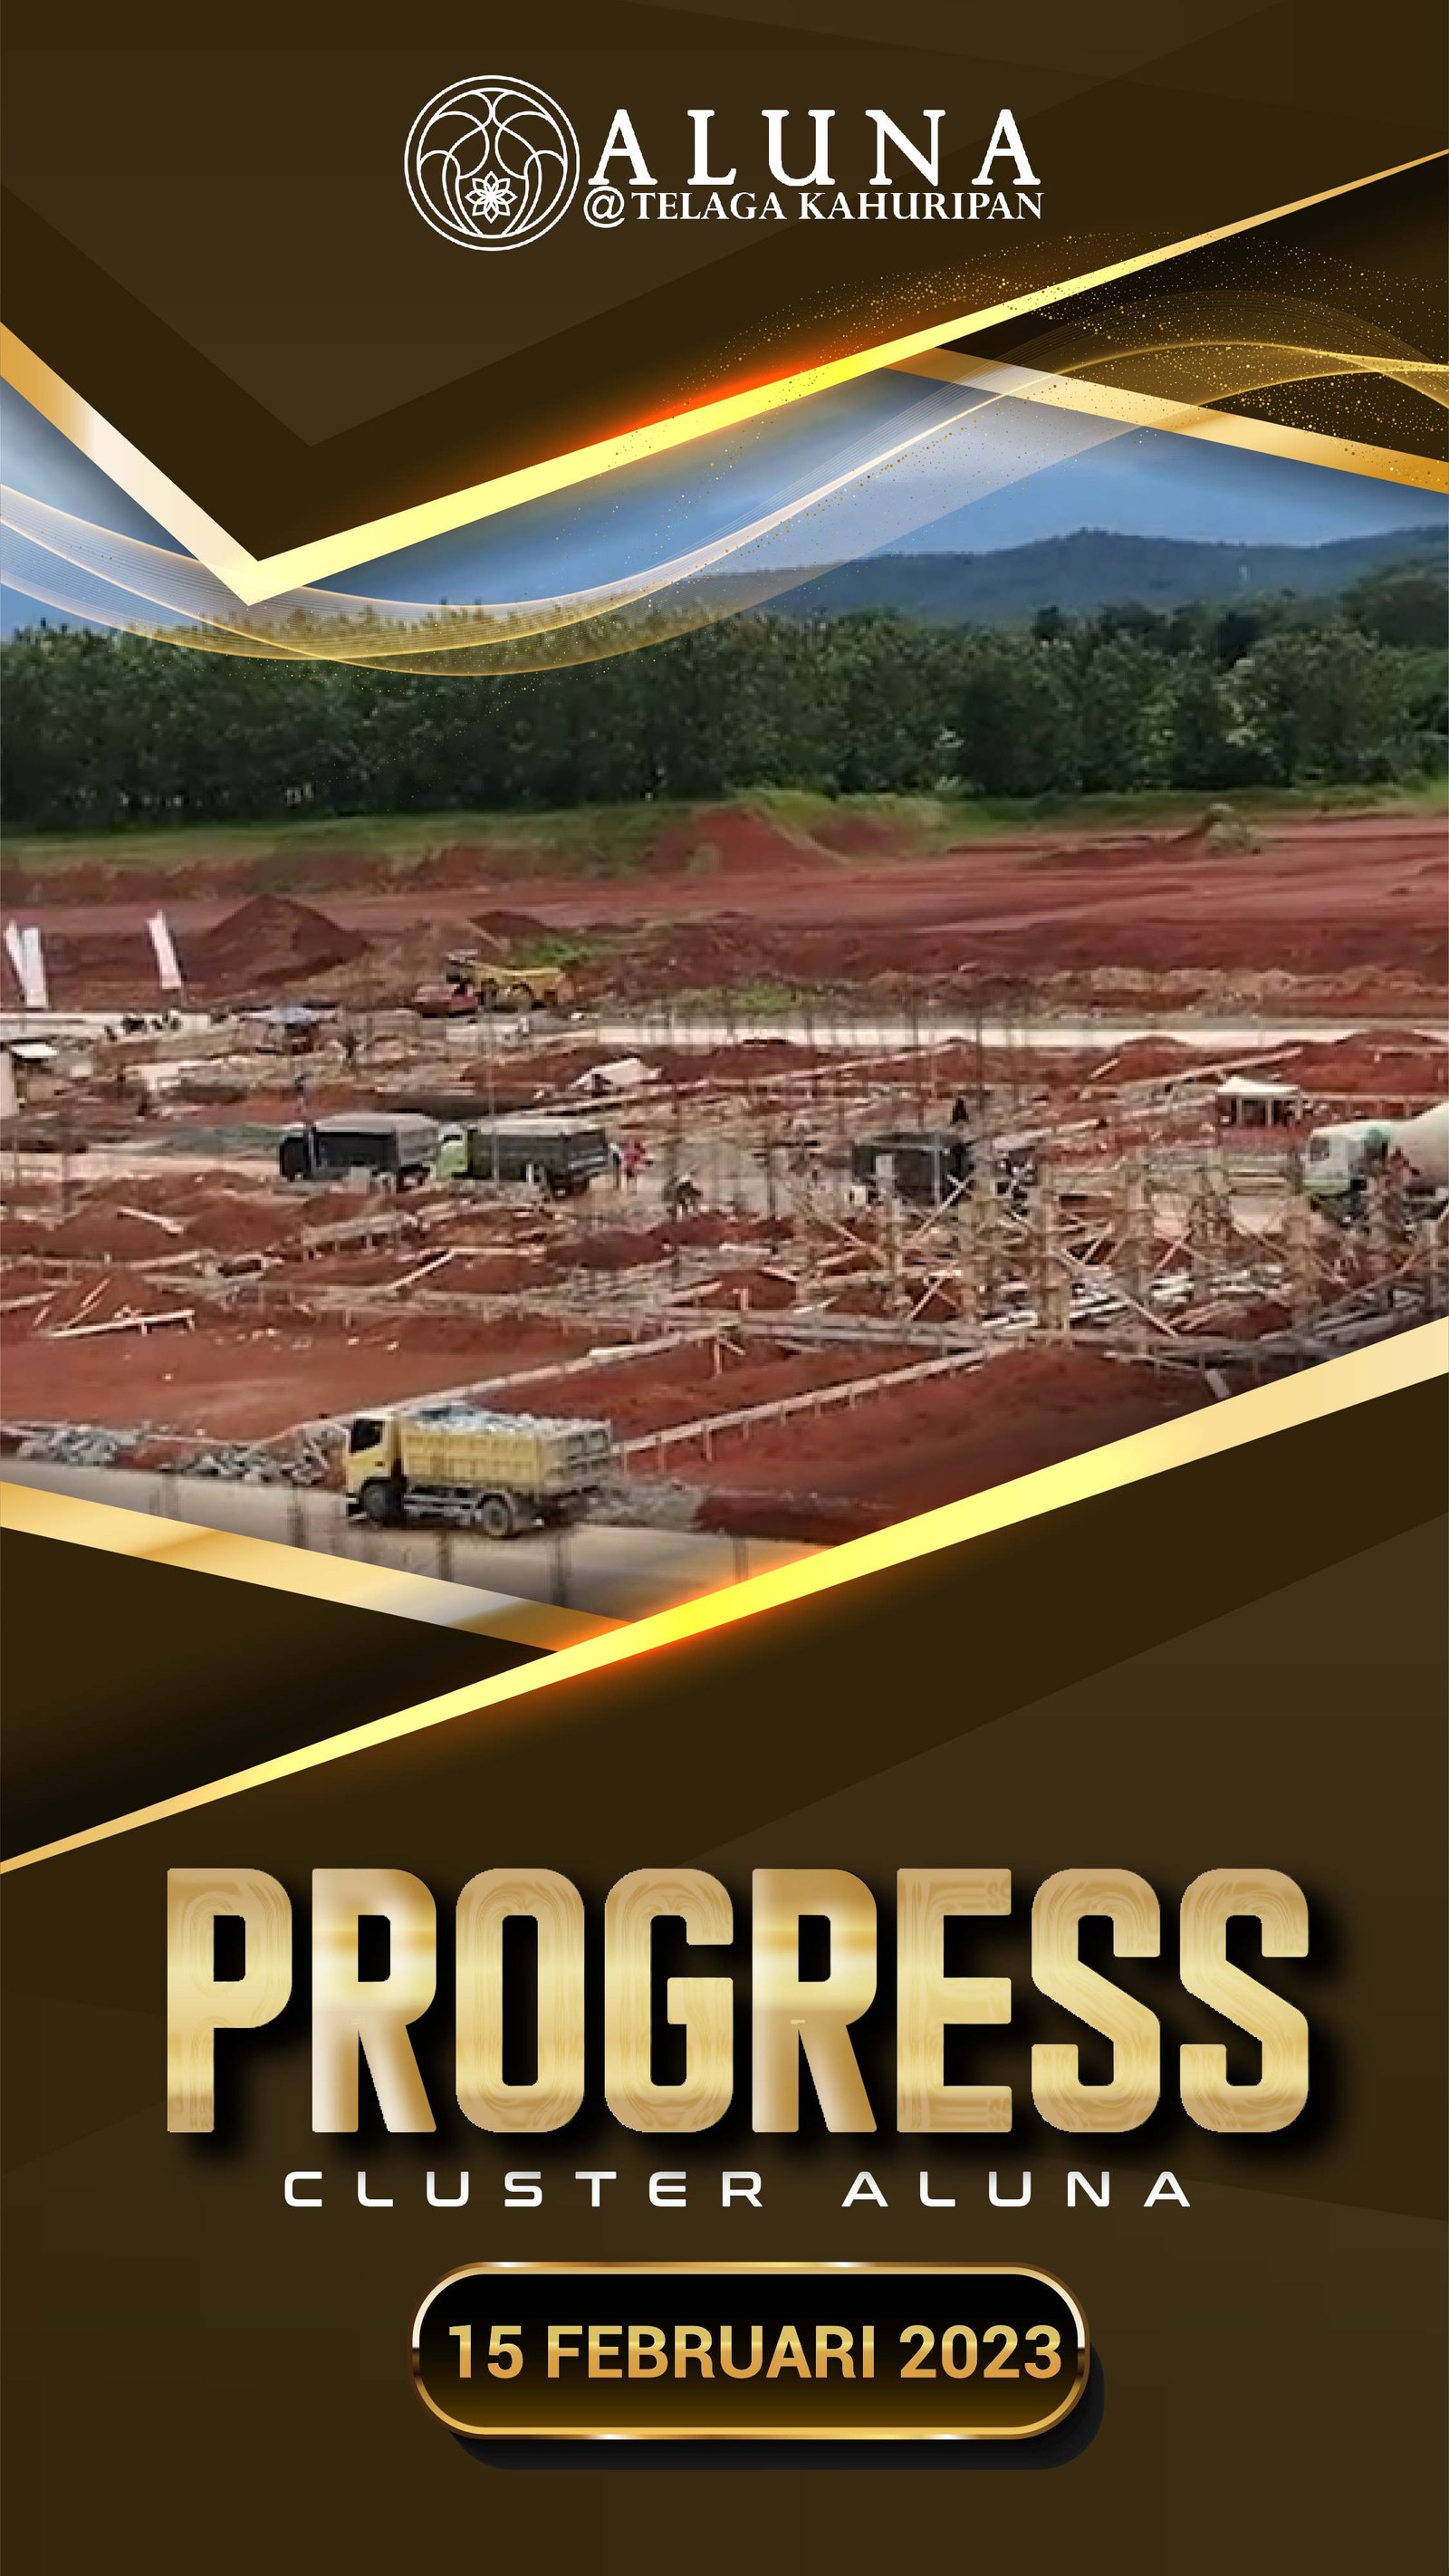 BLOG-progress-project-cluster-aluna-by-telaga-kahuripan-15-februari-2023